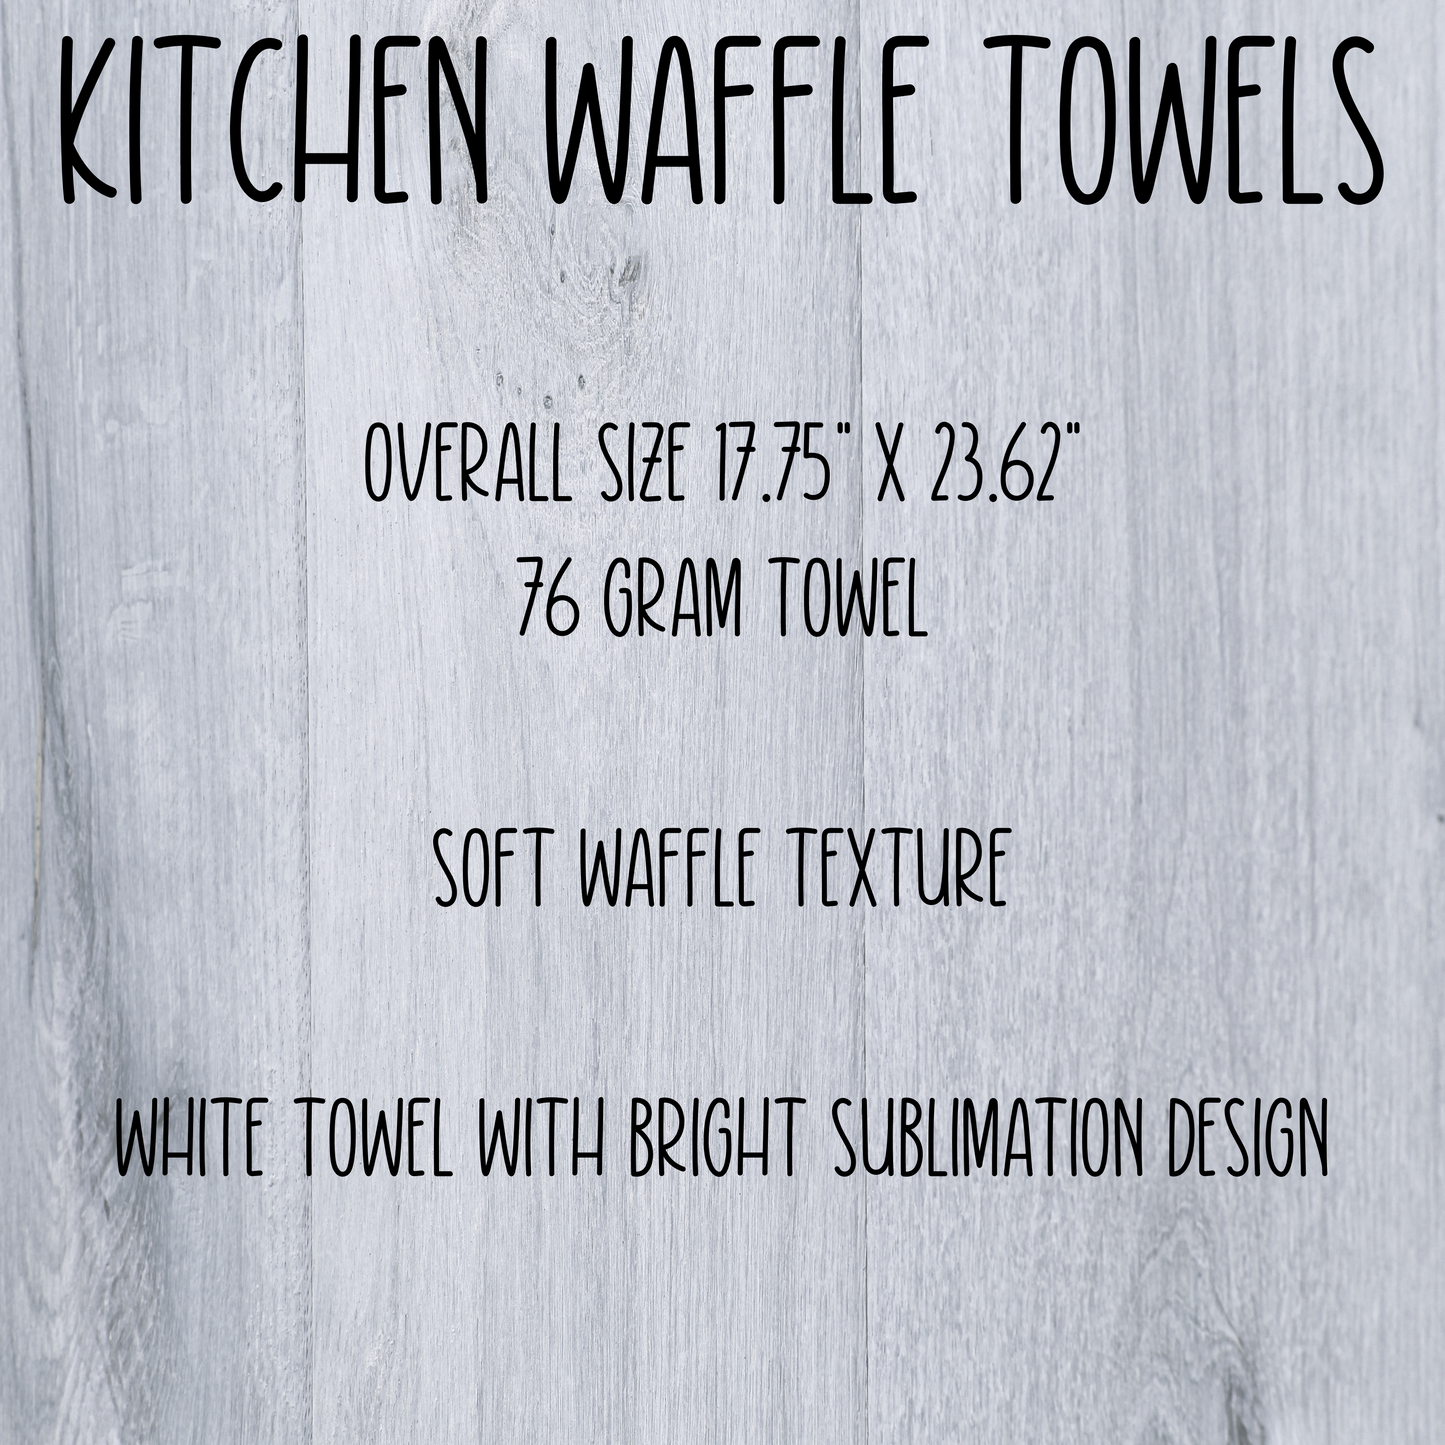 Just Beat It - Vintage Style Kitchen Waffle Towel